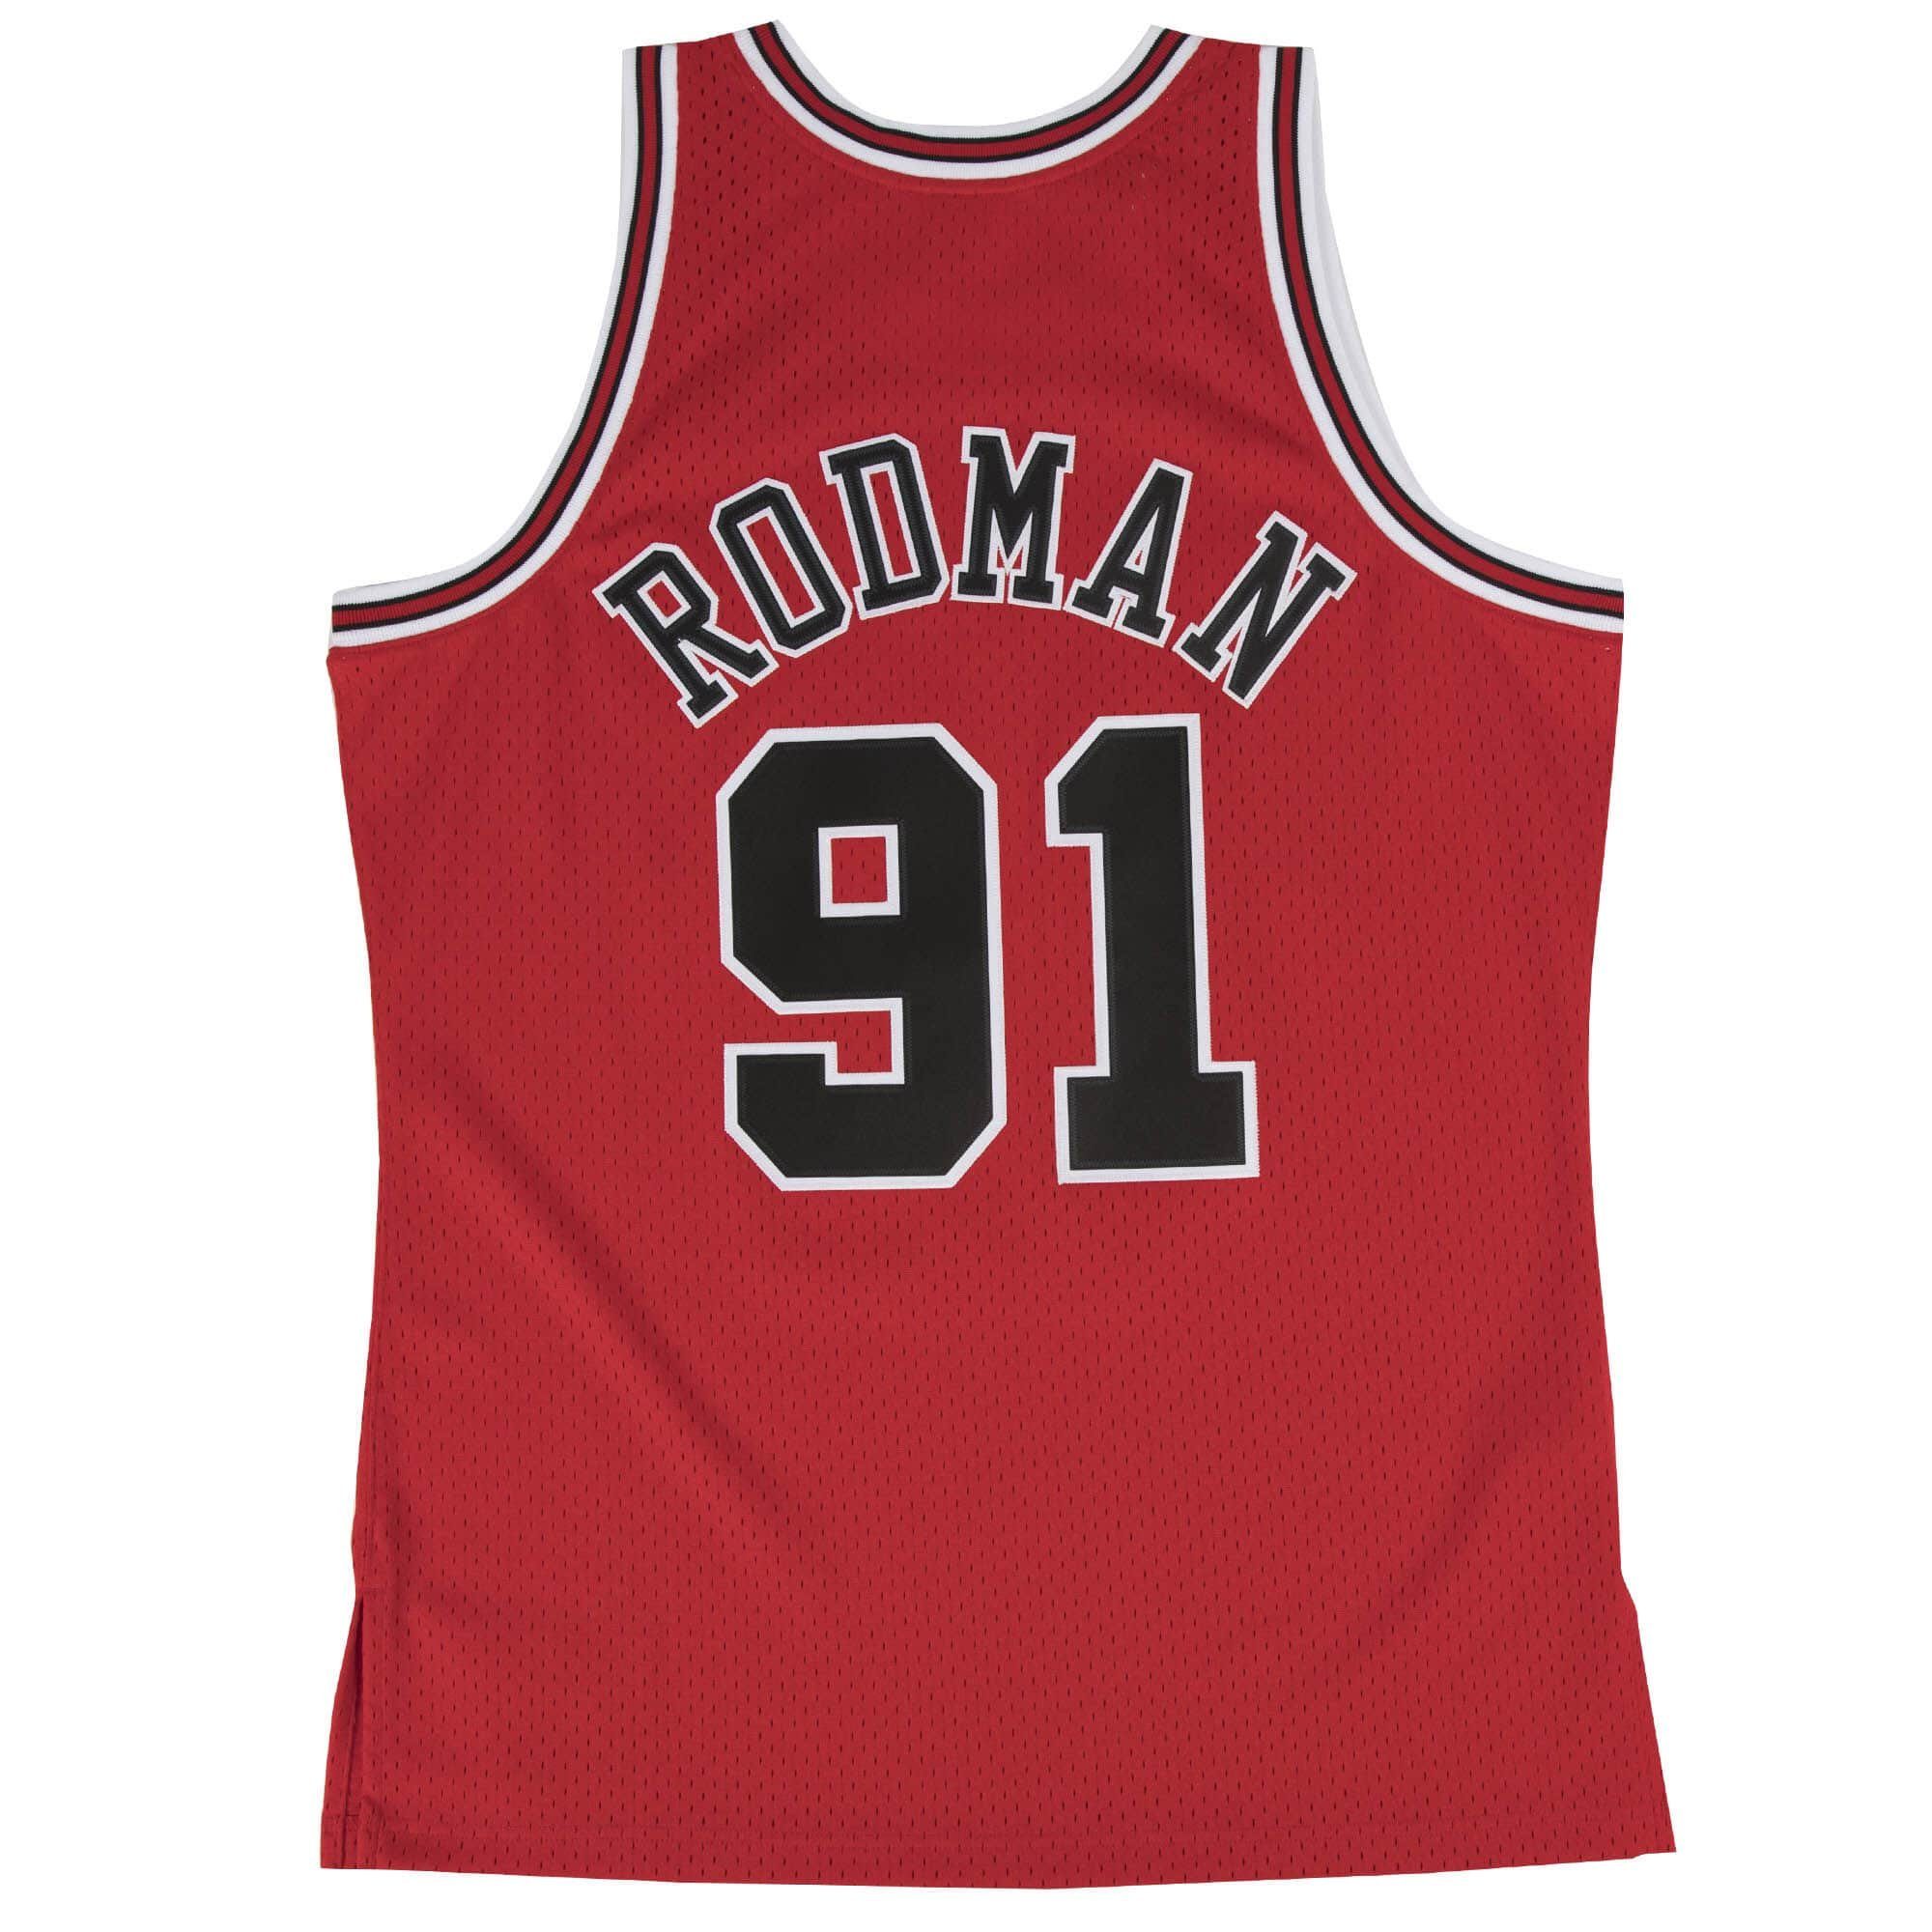 Rodman Dennis Chicago Road 1997-98 Mitchell Basketballtrikot HWC & Ness Bulls rot